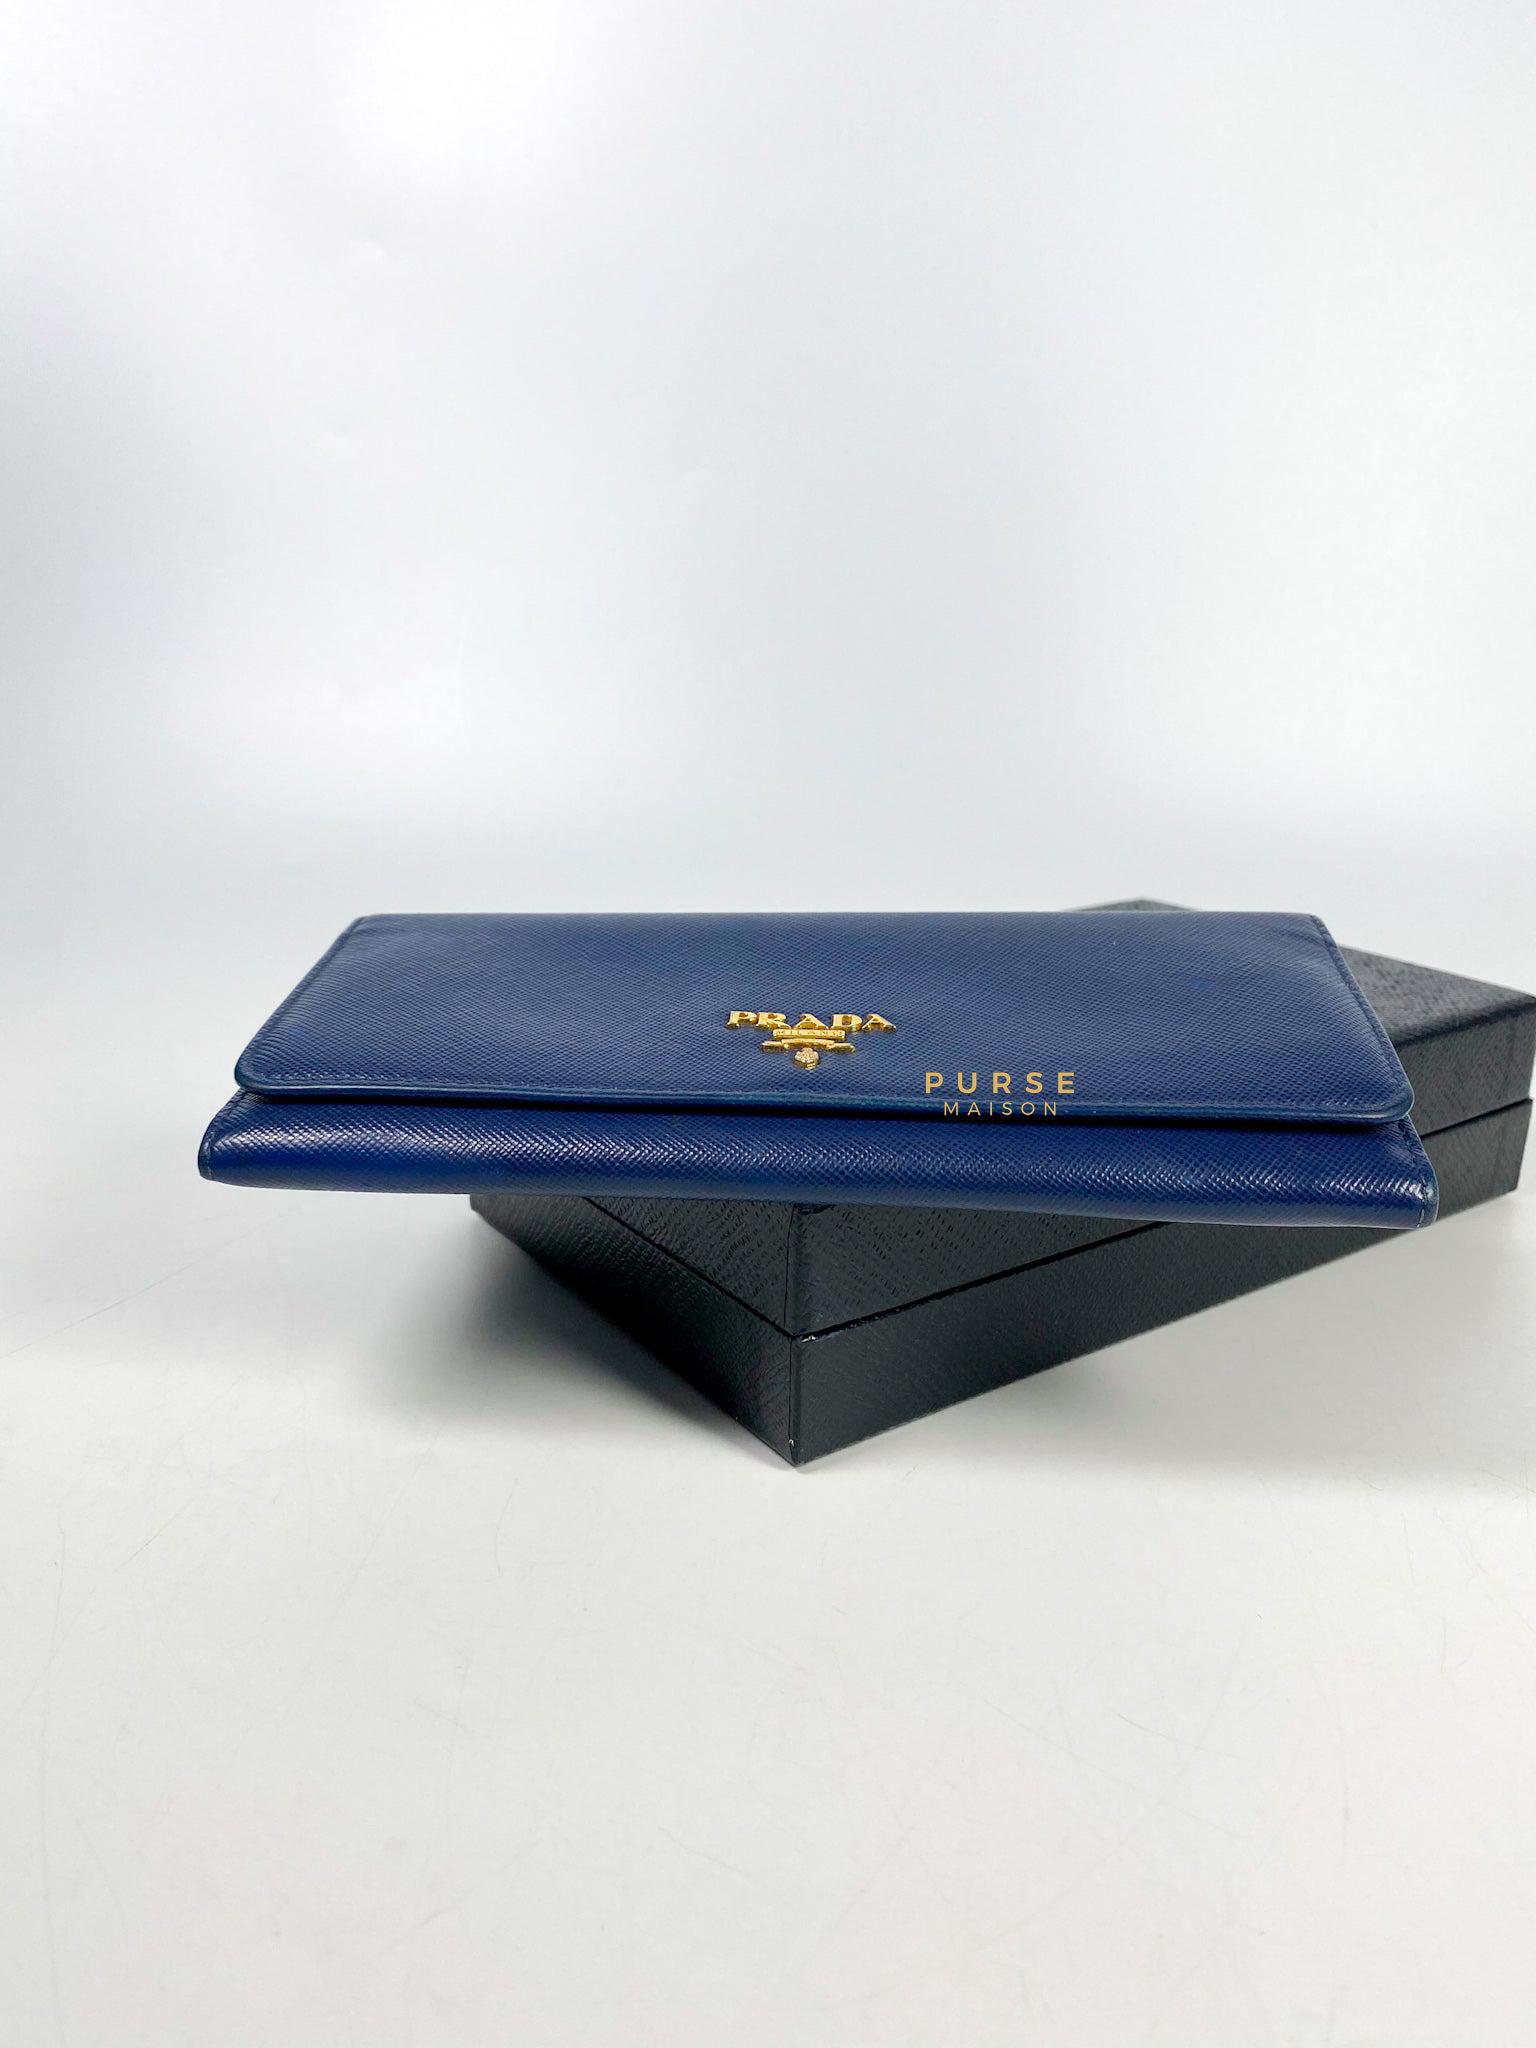 Prada BN2541 Tessuto Saffian Blue Wallet with Entrupy